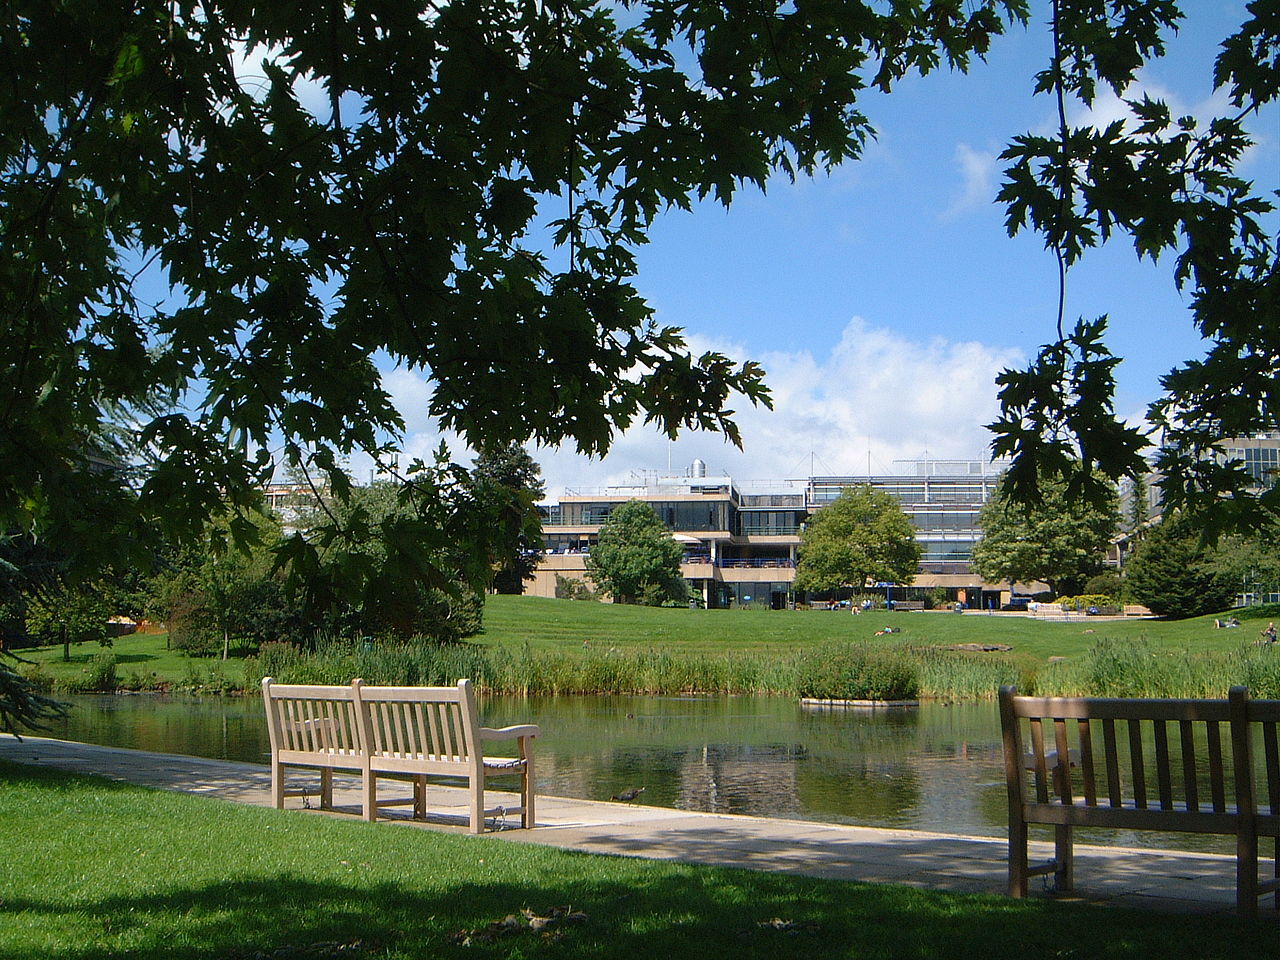 University of Bath - campus lake scene